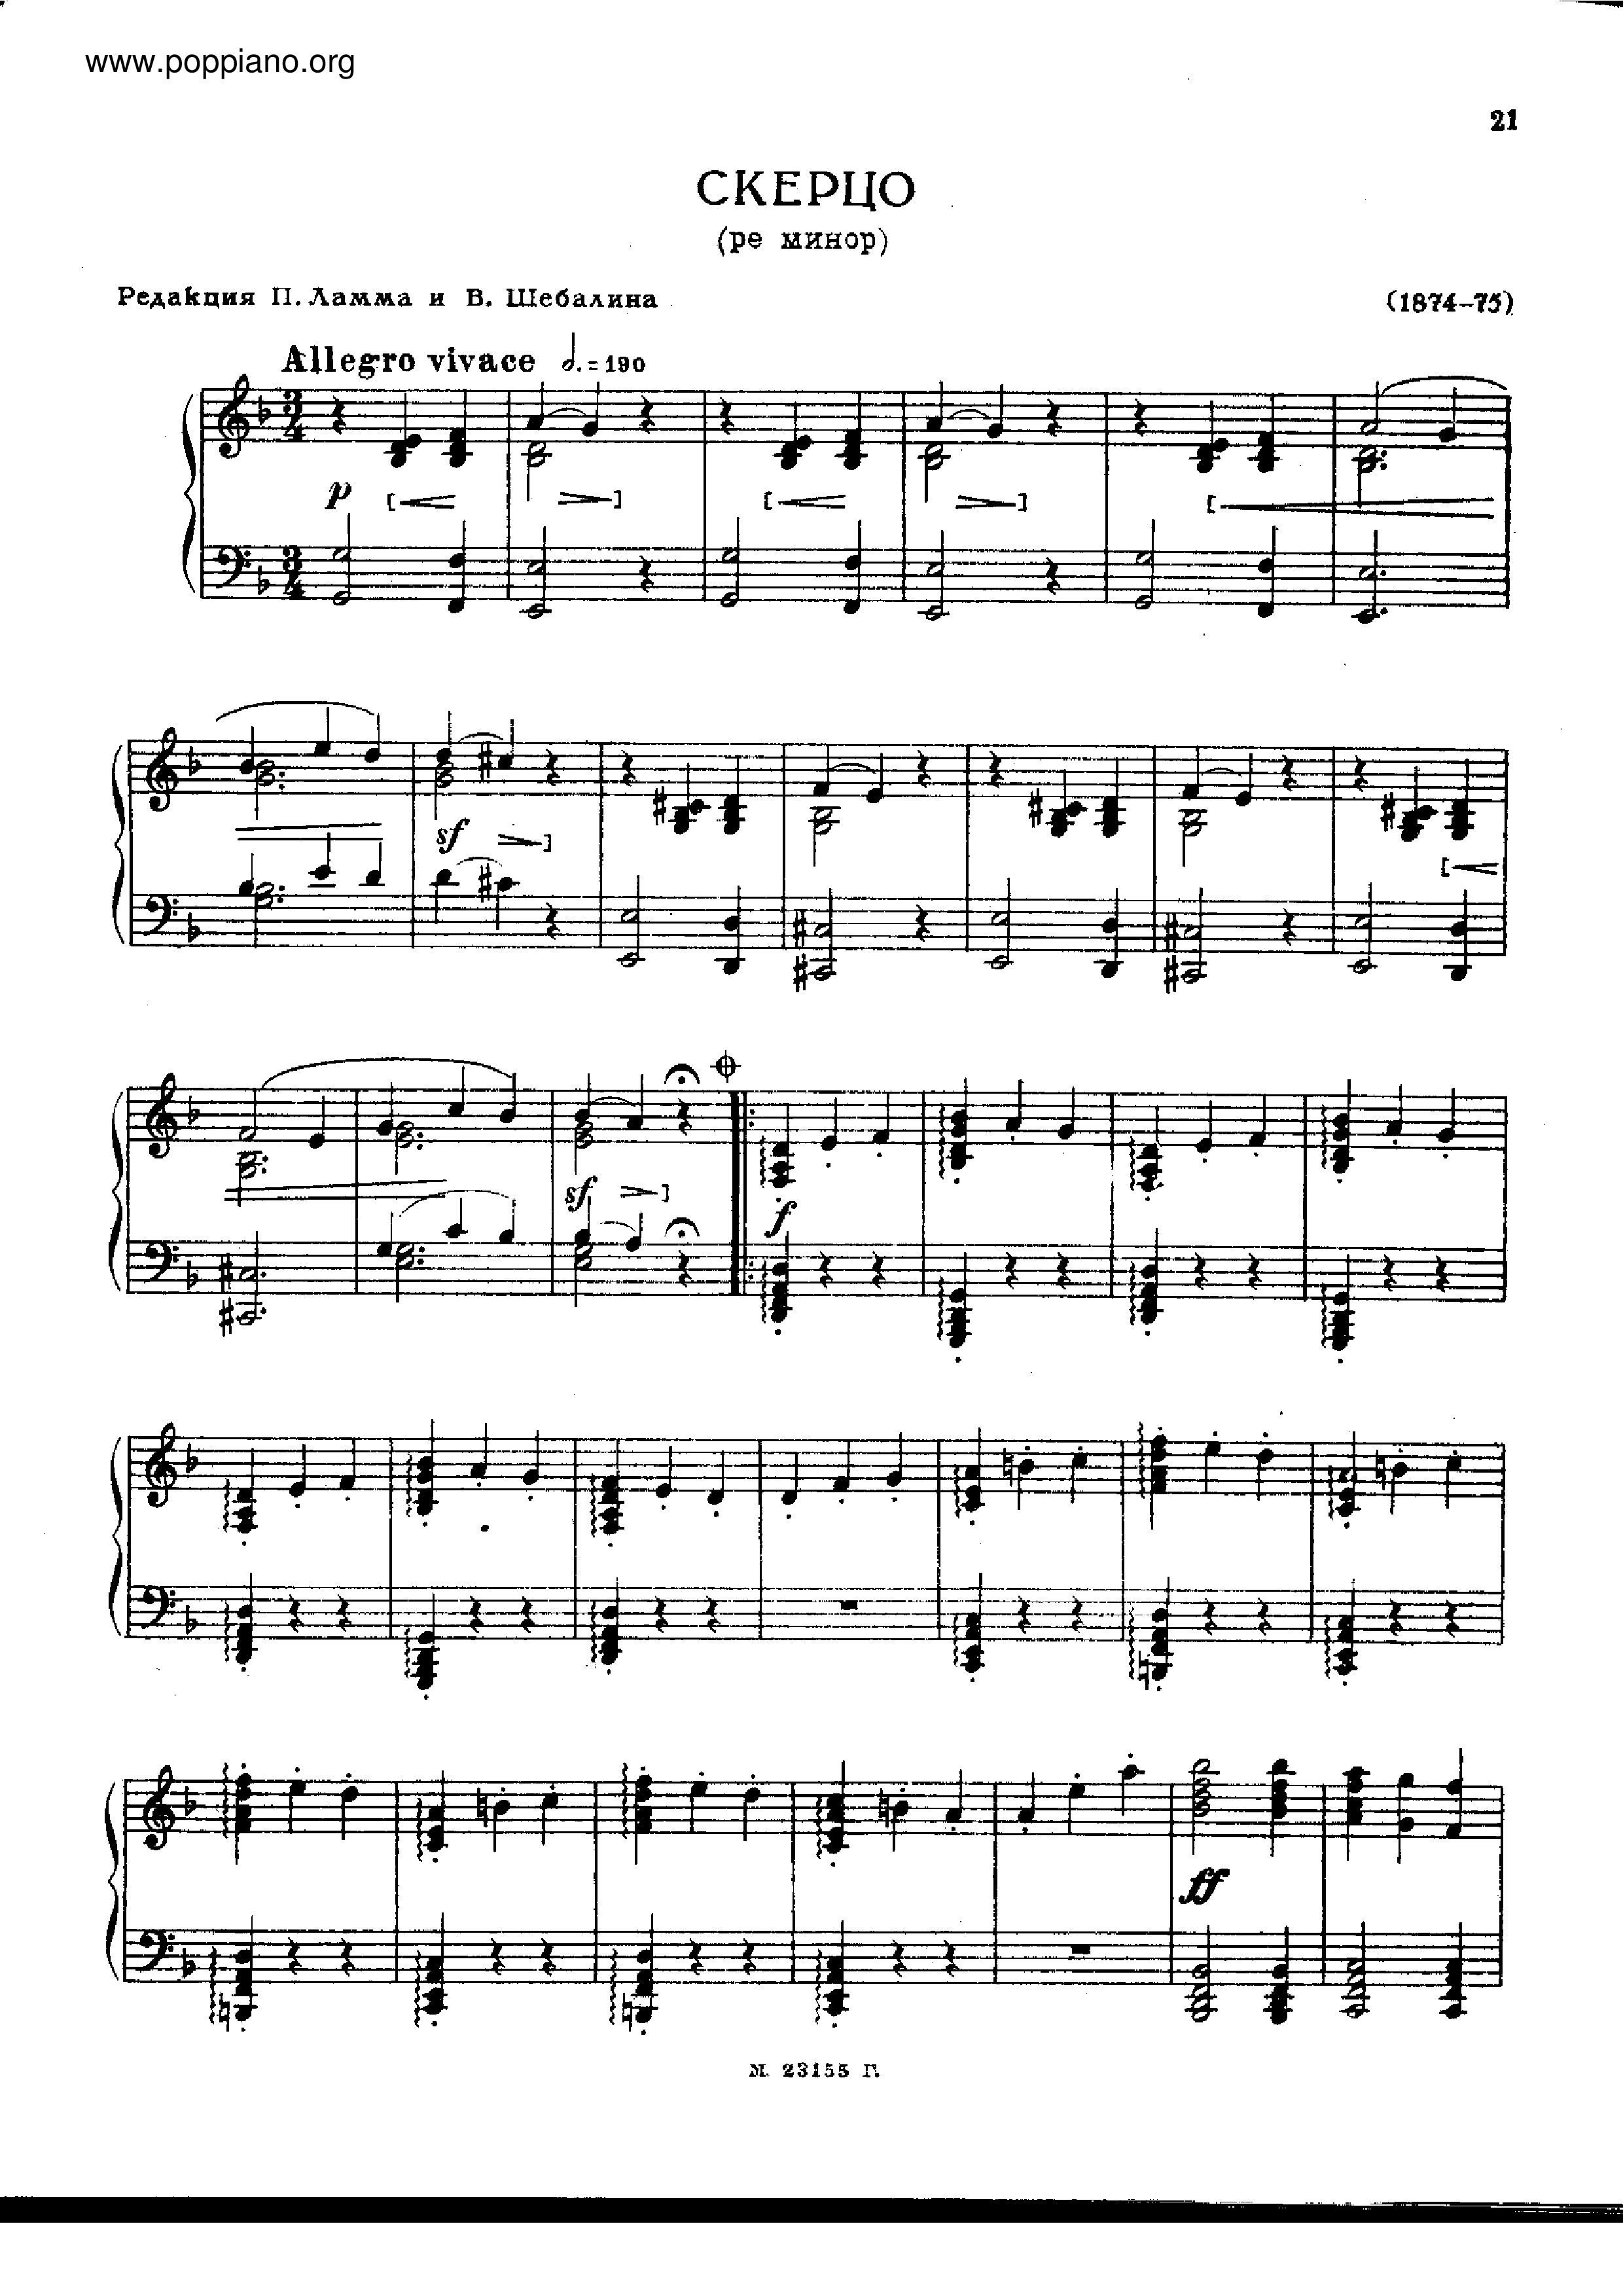 No.4 in D minor琴谱